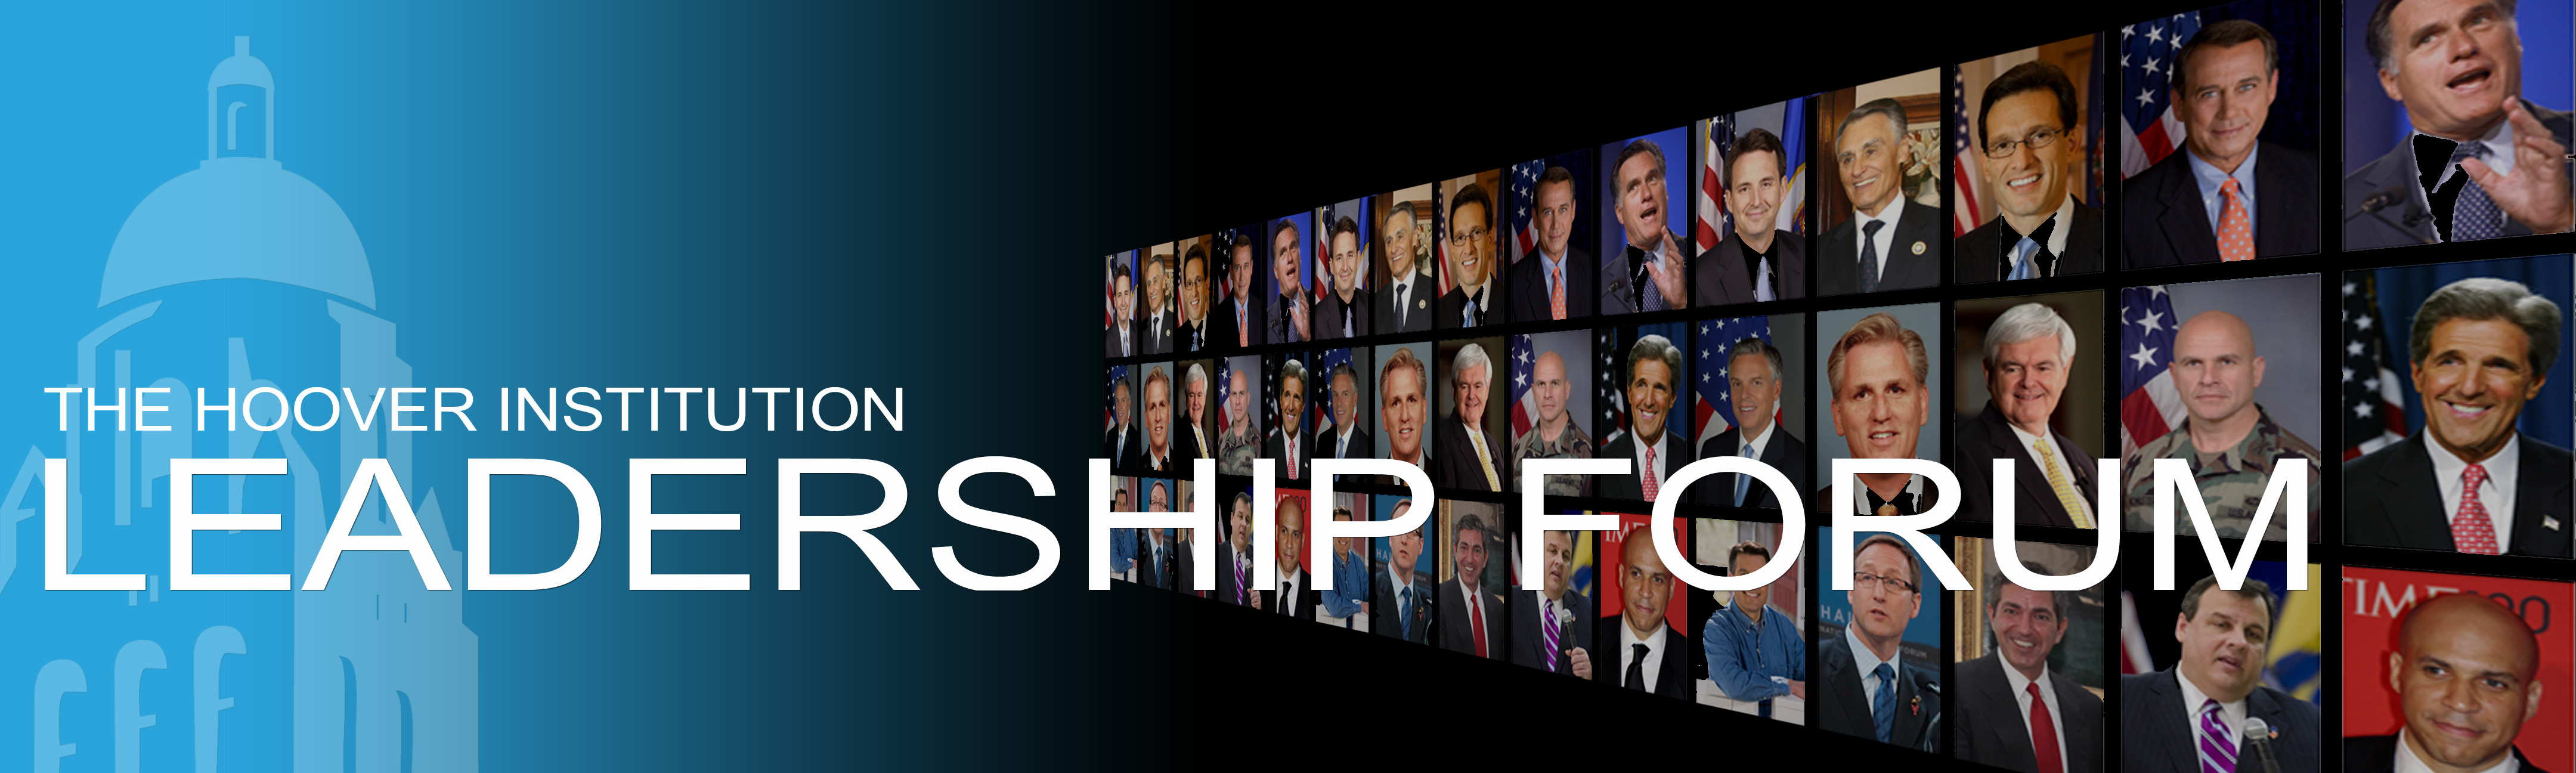 leadershipforumheader_faces_flat.jpg